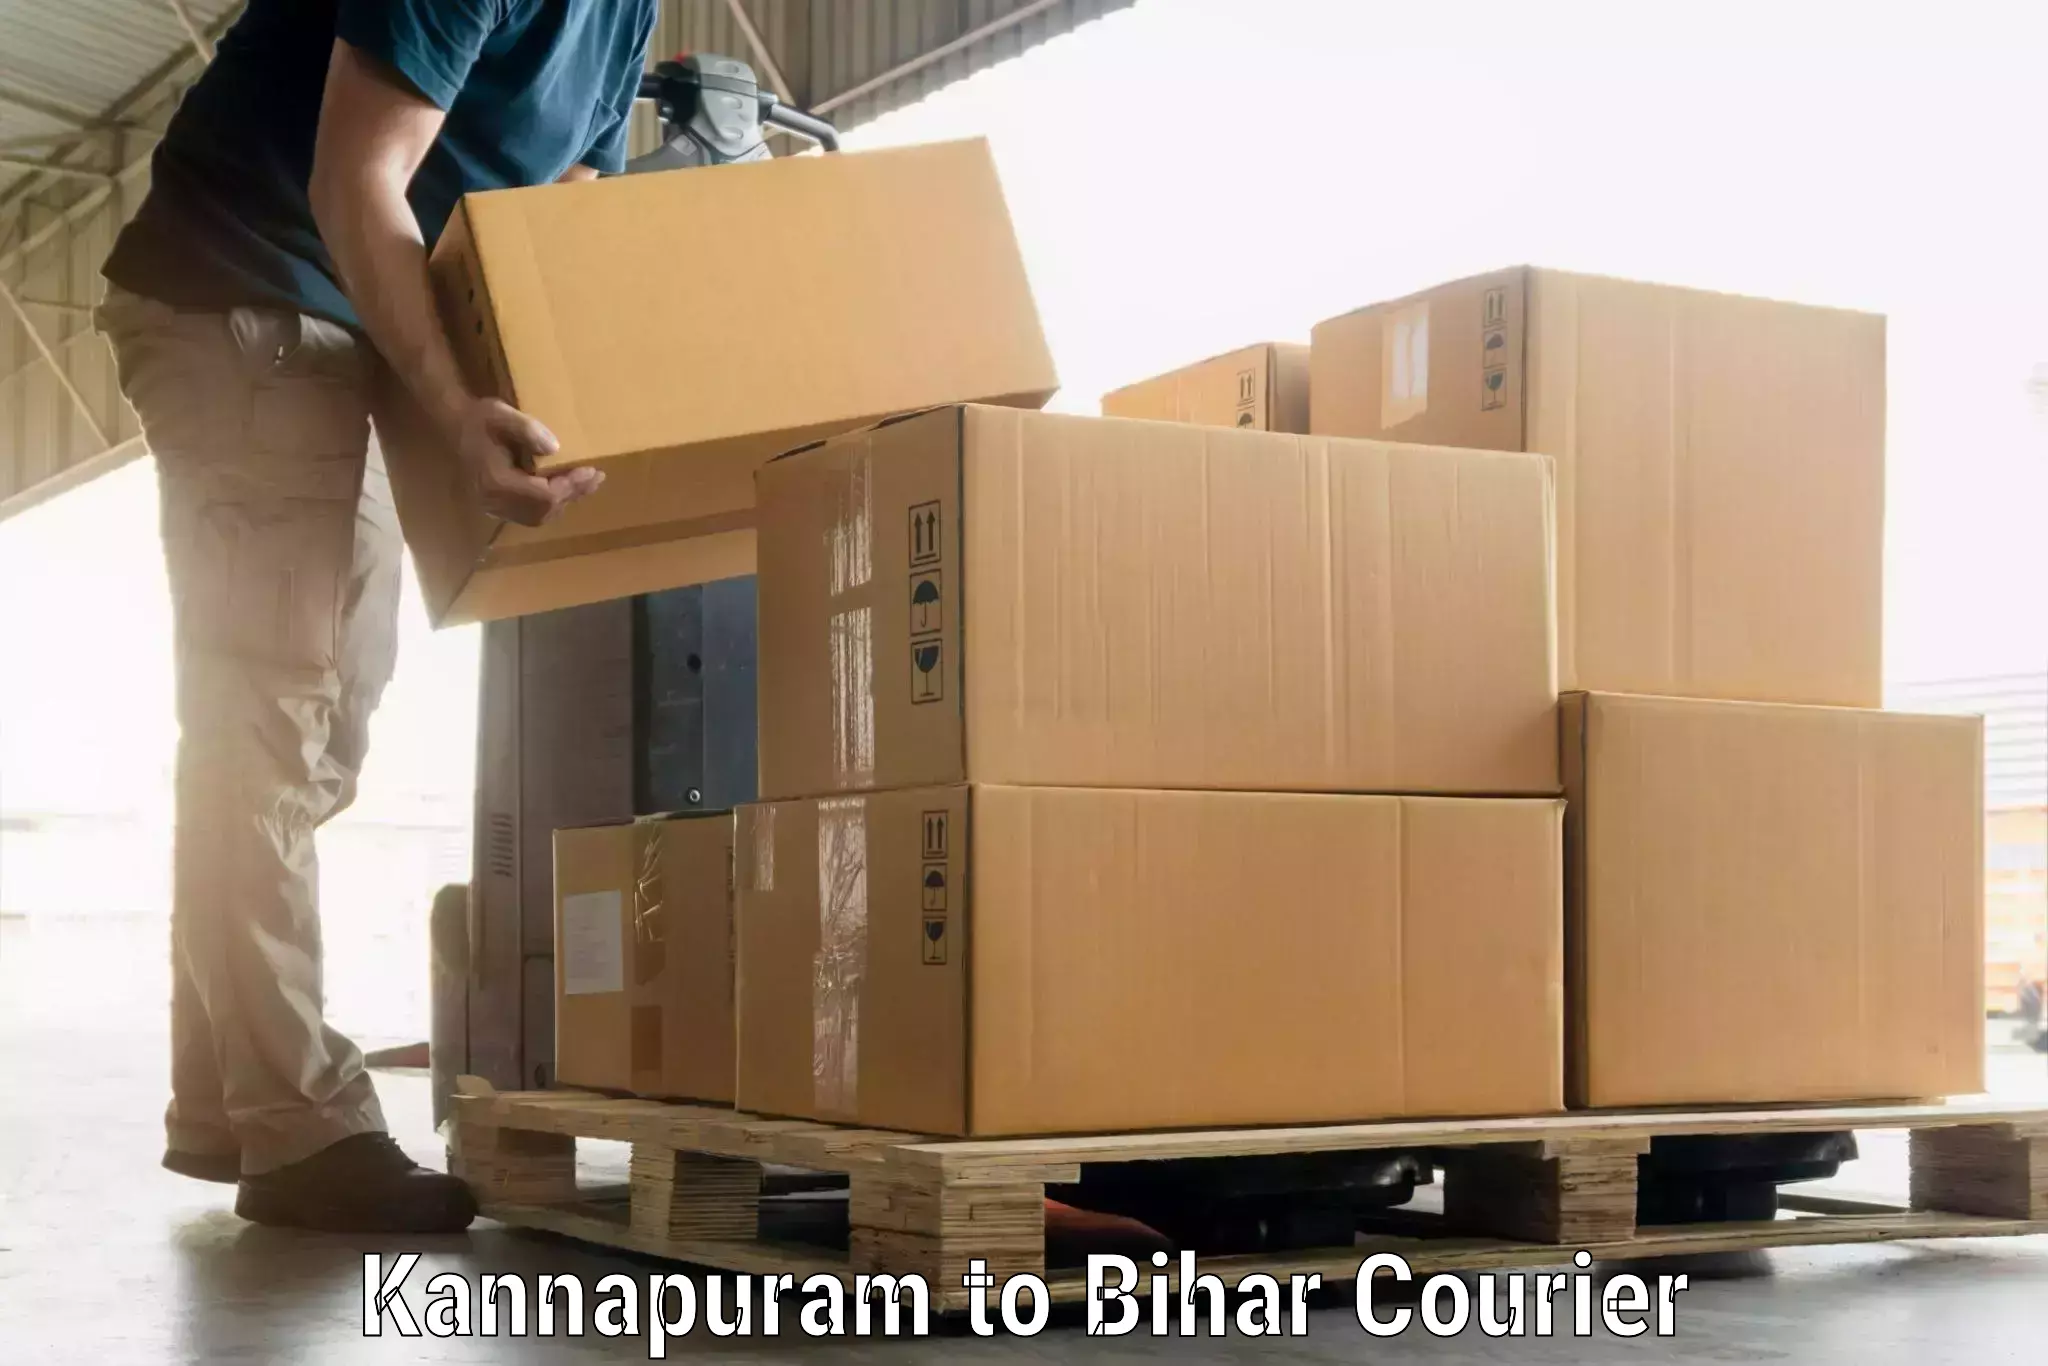 Baggage transport network Kannapuram to Bihar